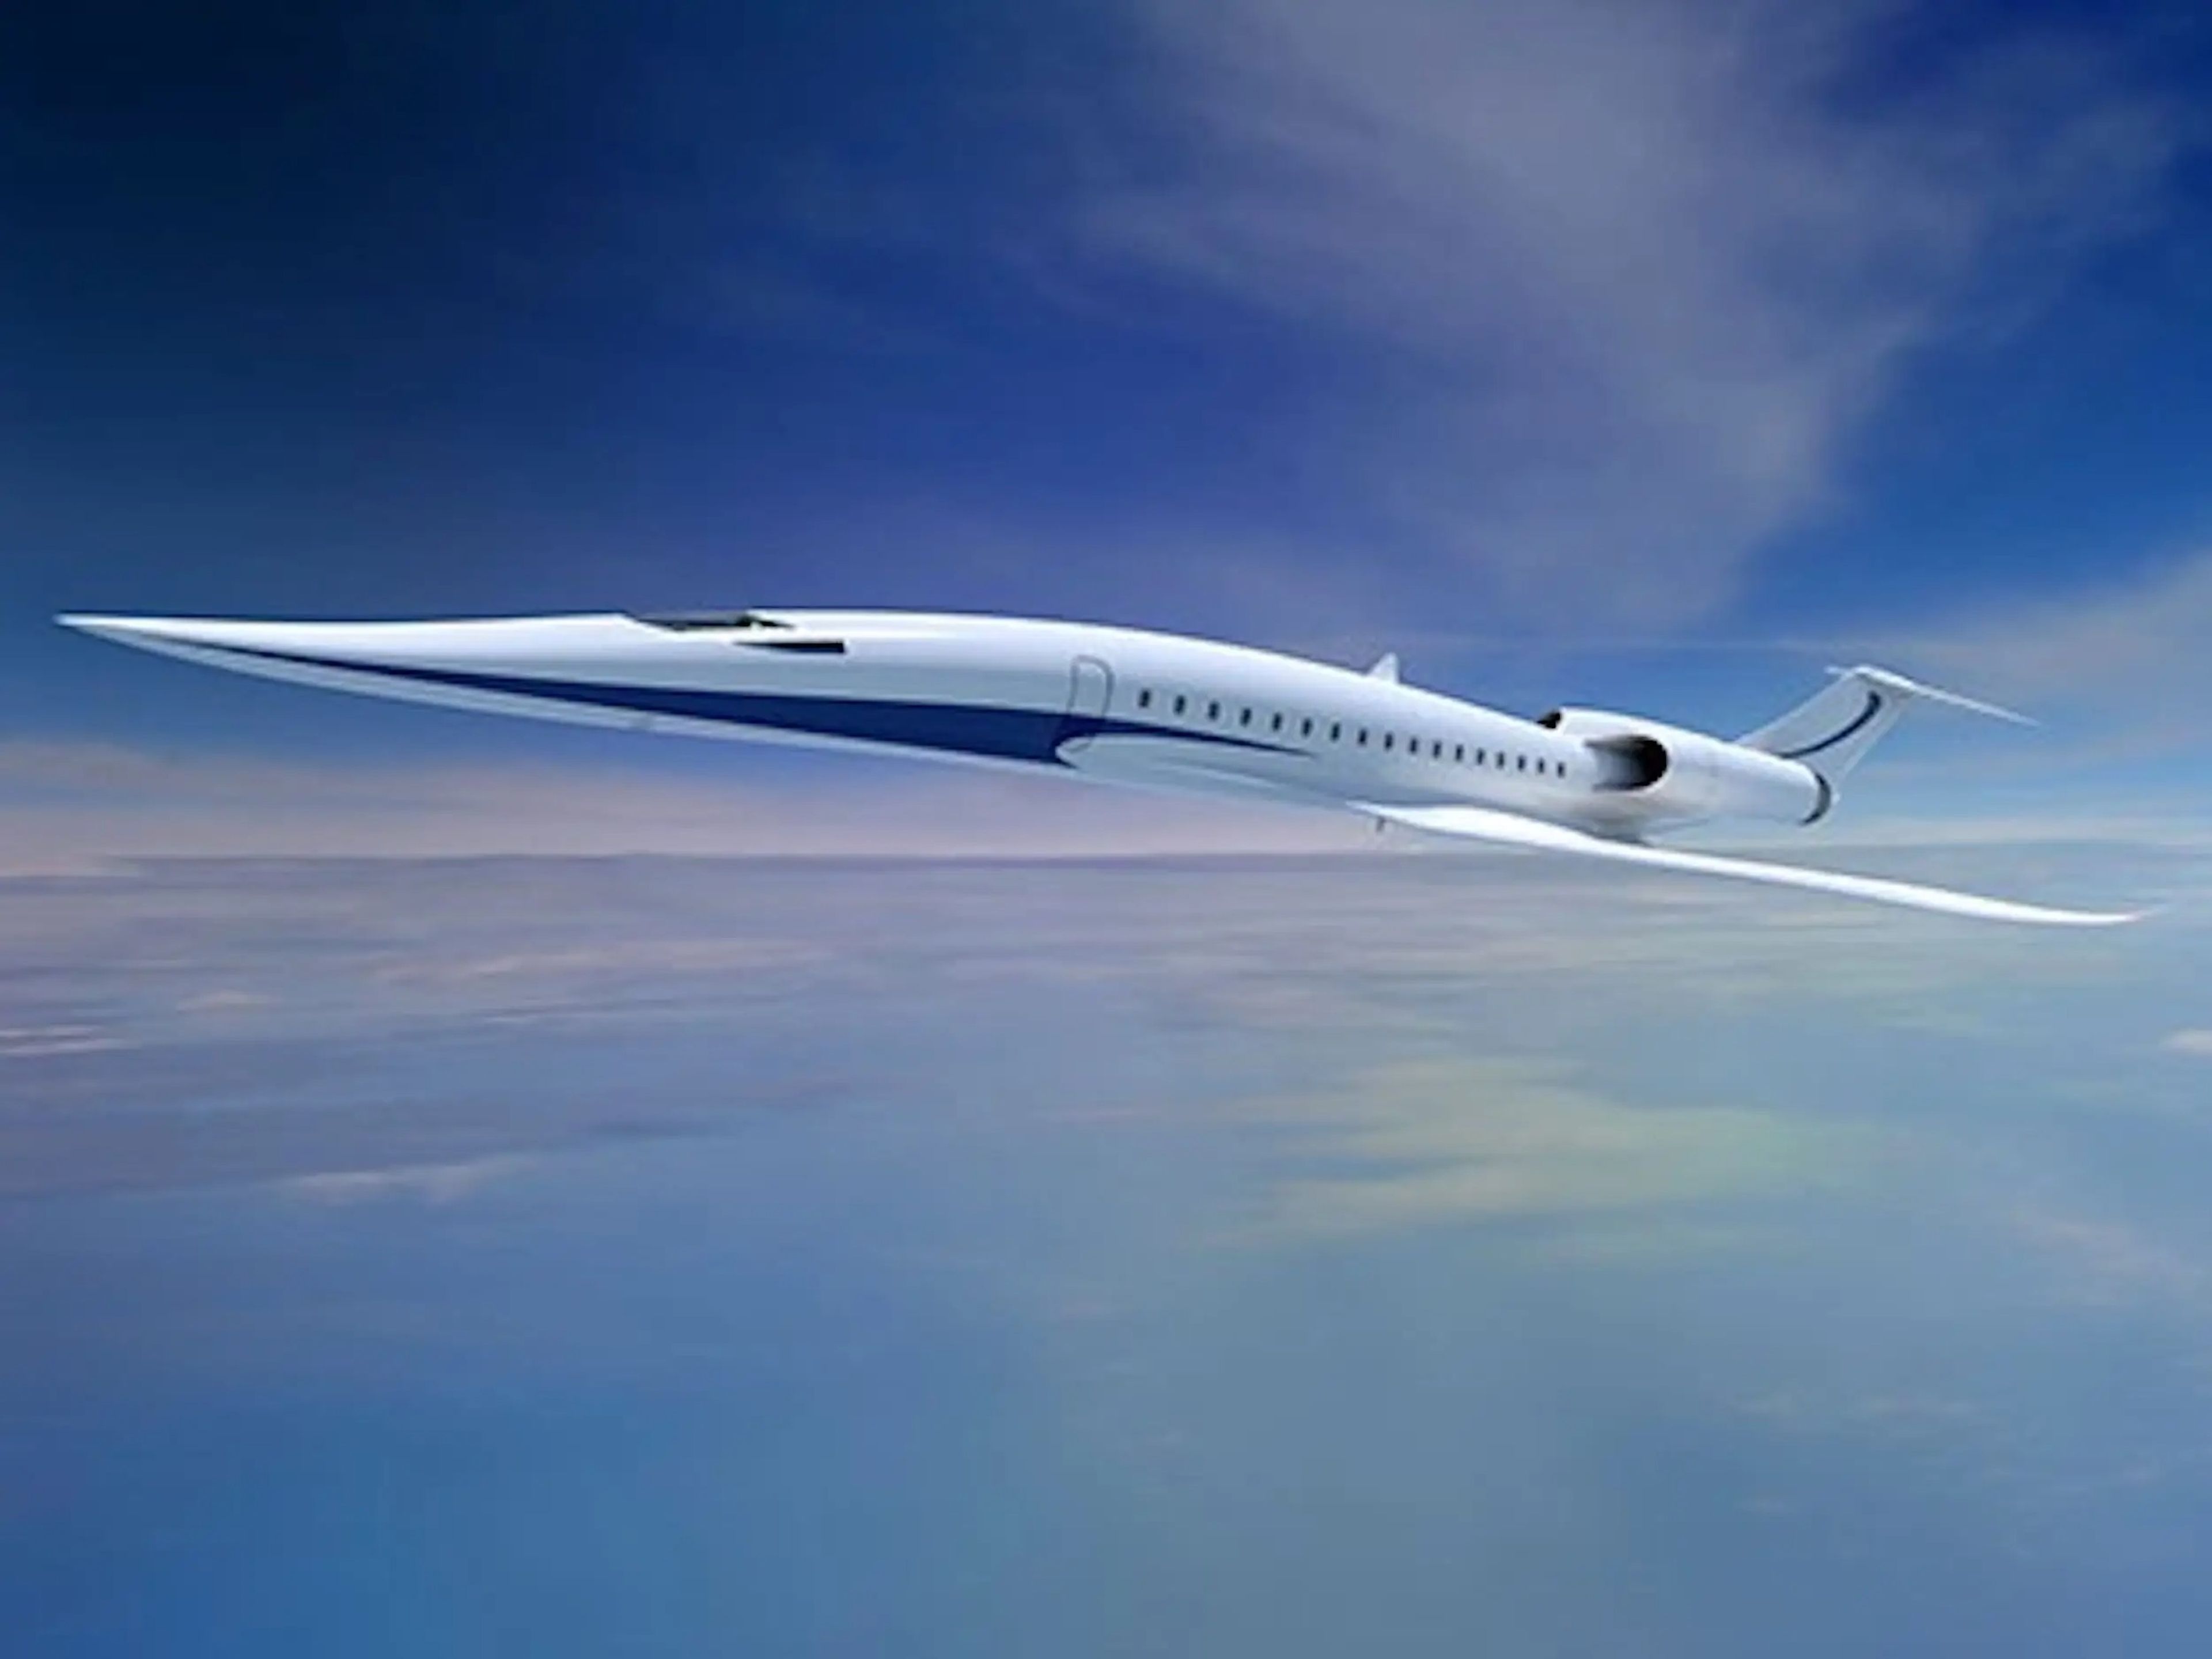 Concept image of the JAXA jet.